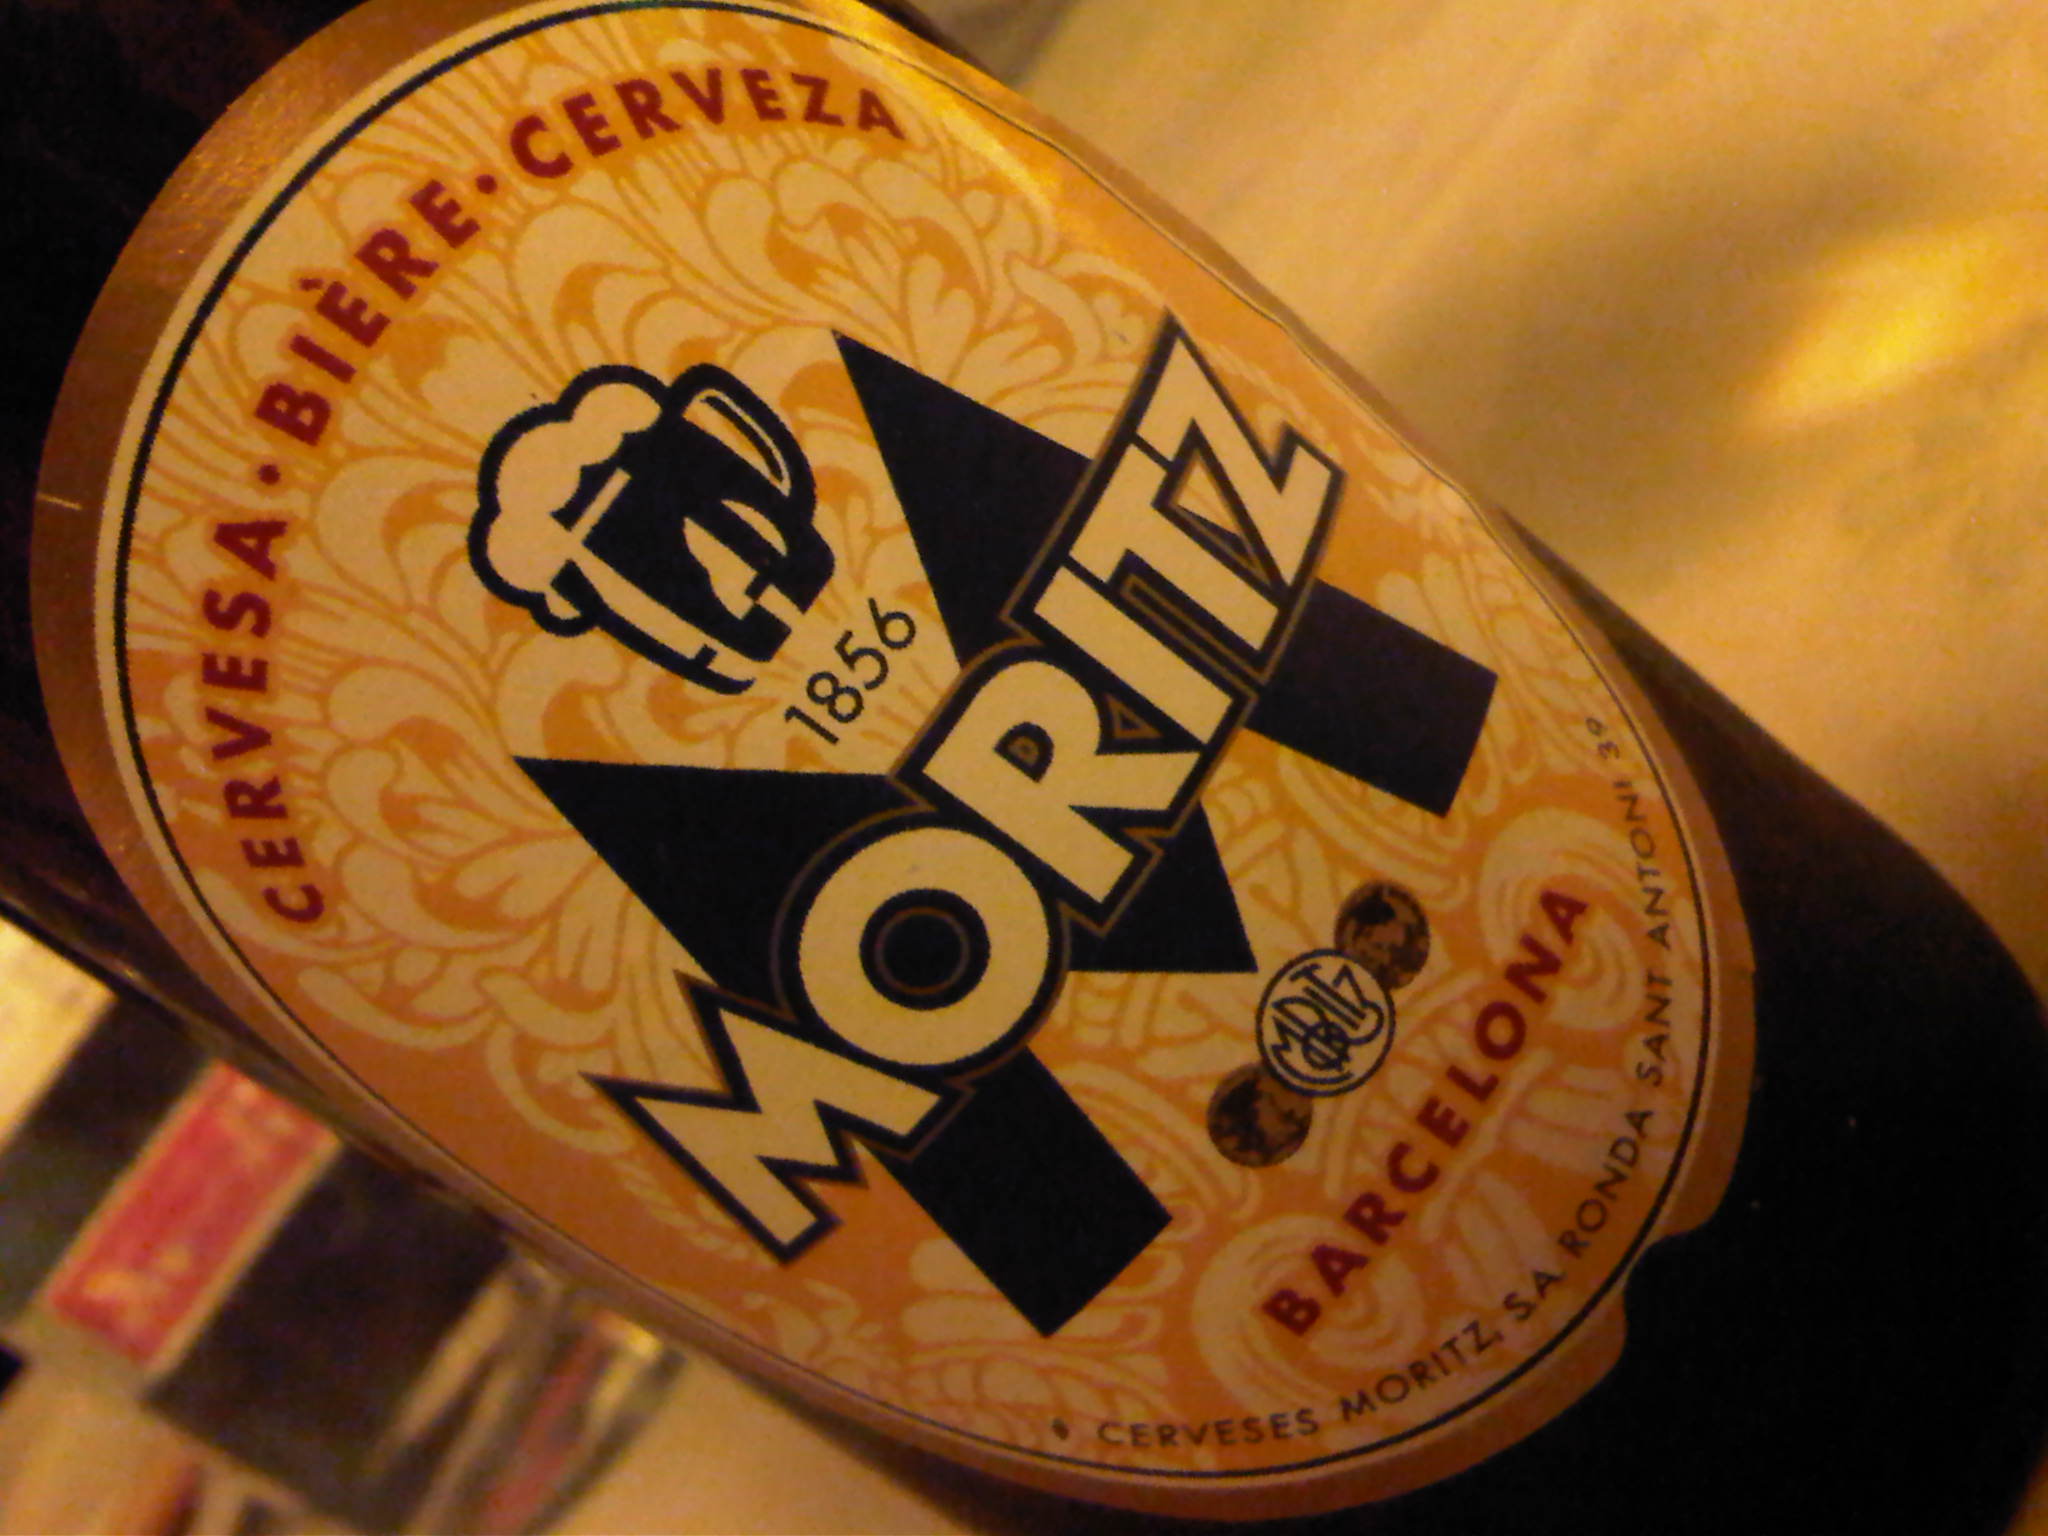 Cerveza Moritz Barcelona 1856